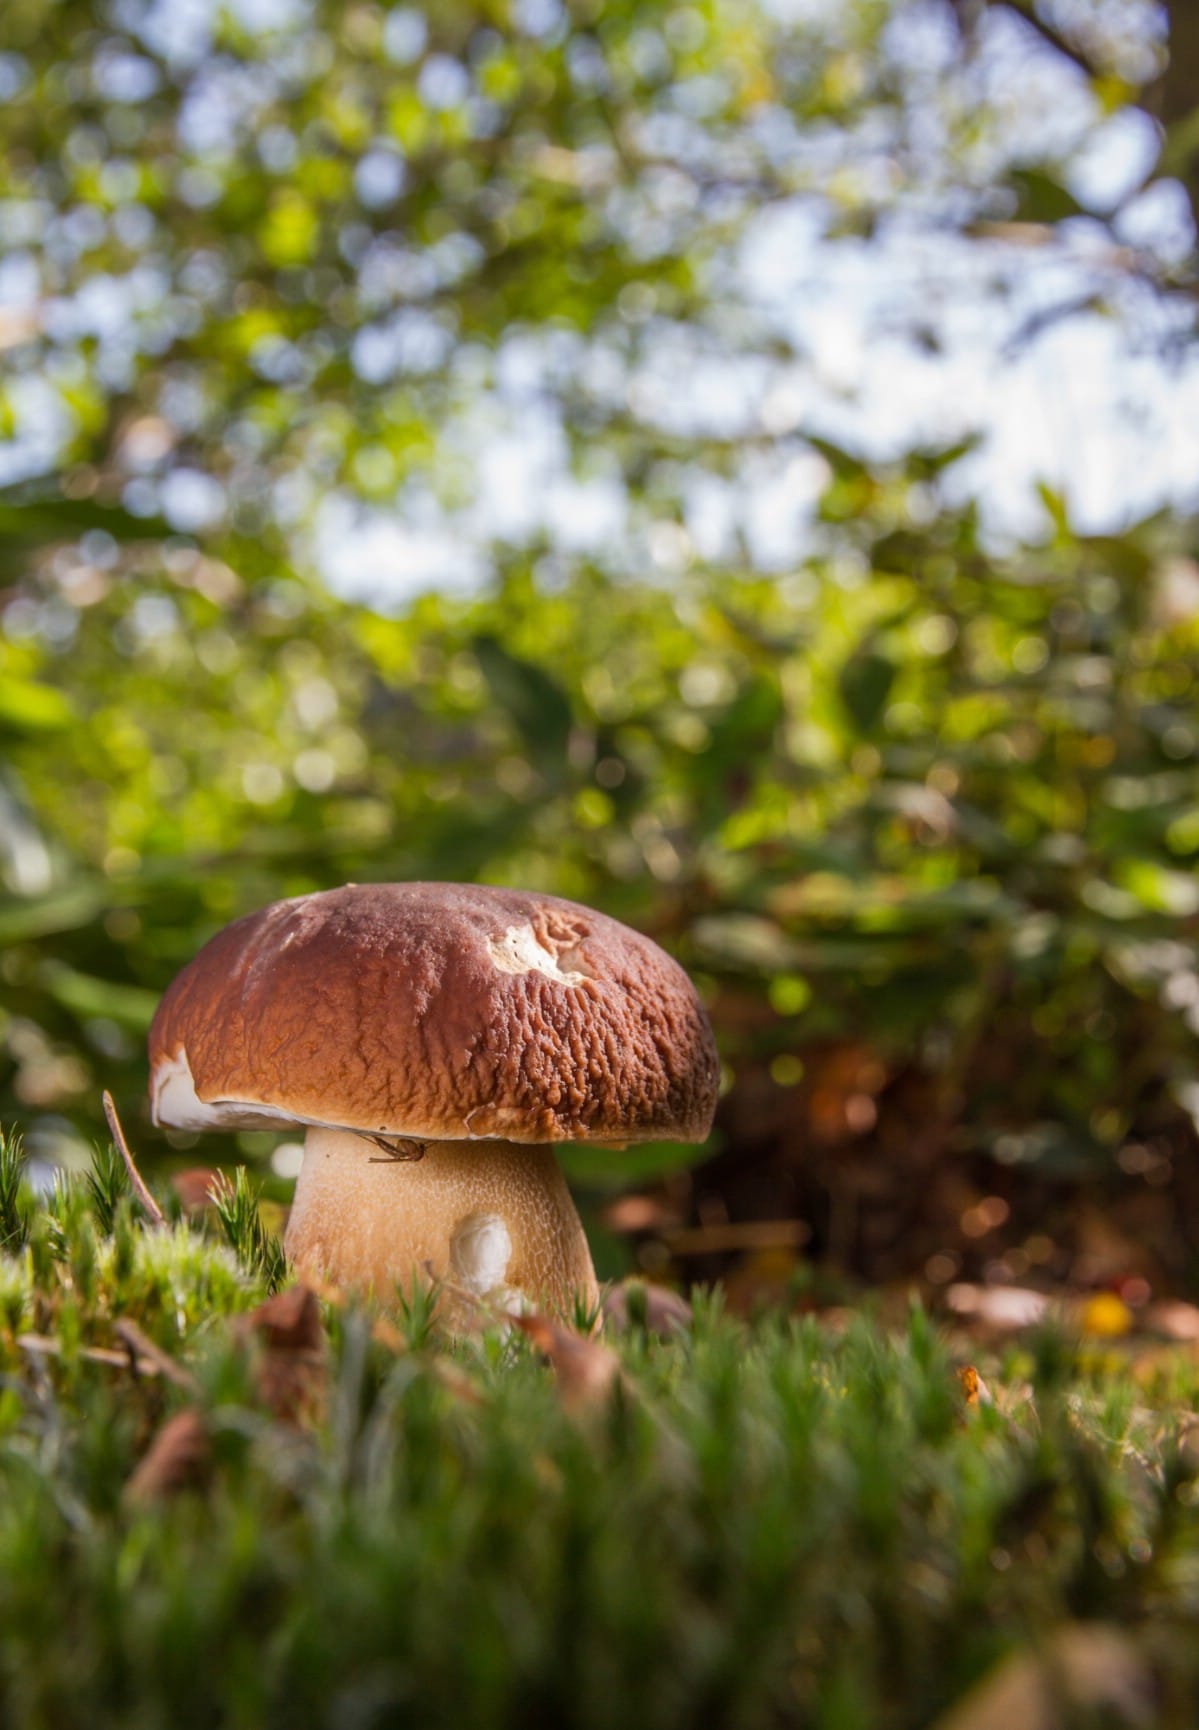 king bolete mushroom forager